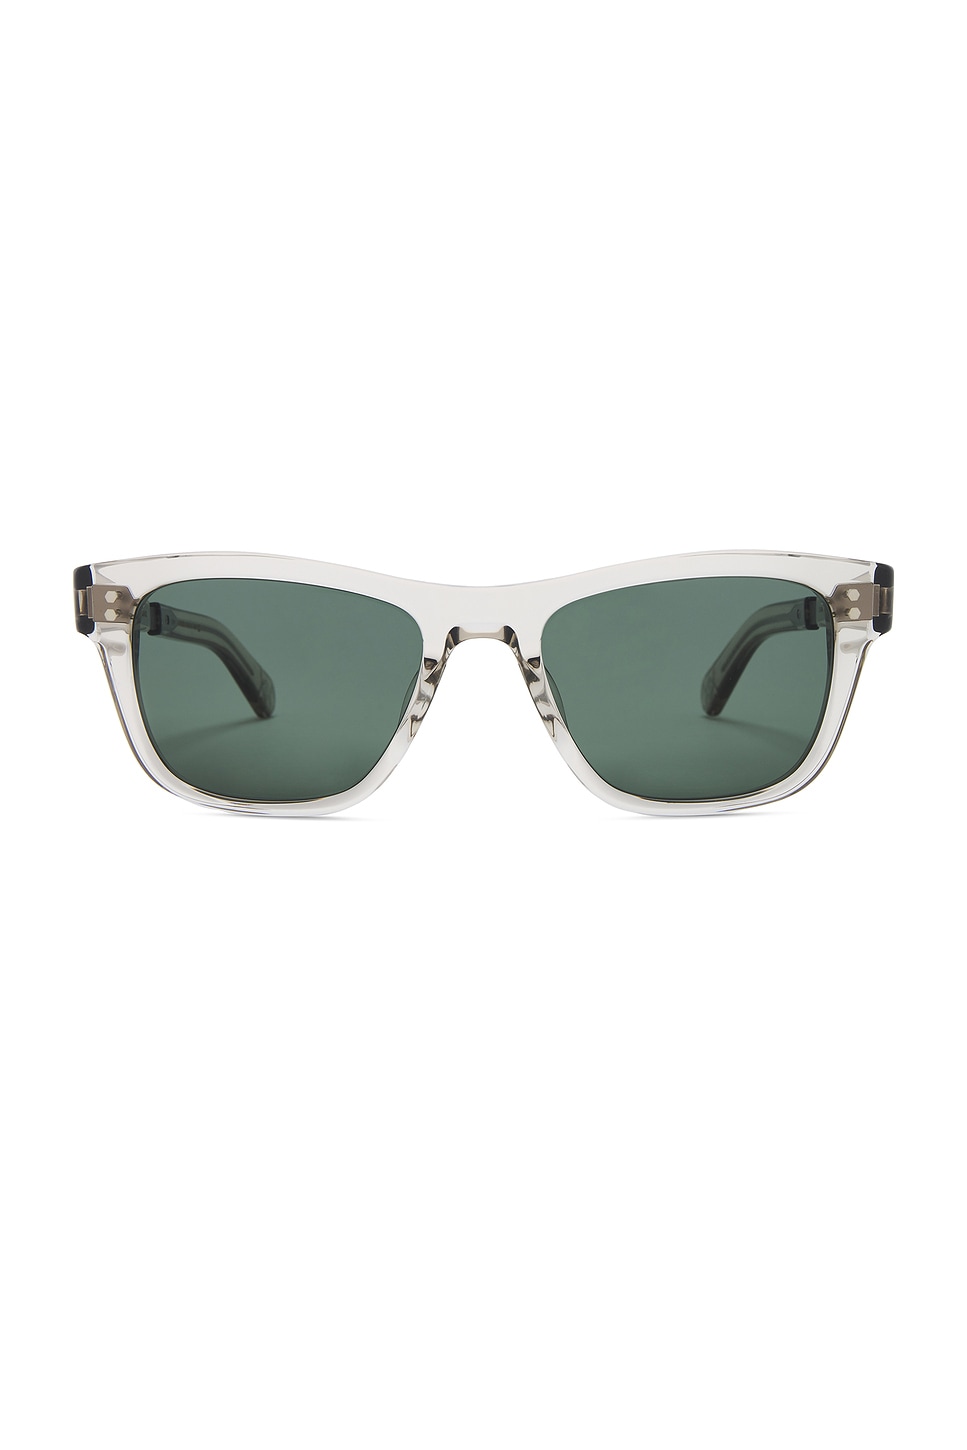 Damone Sunglasses in Grey